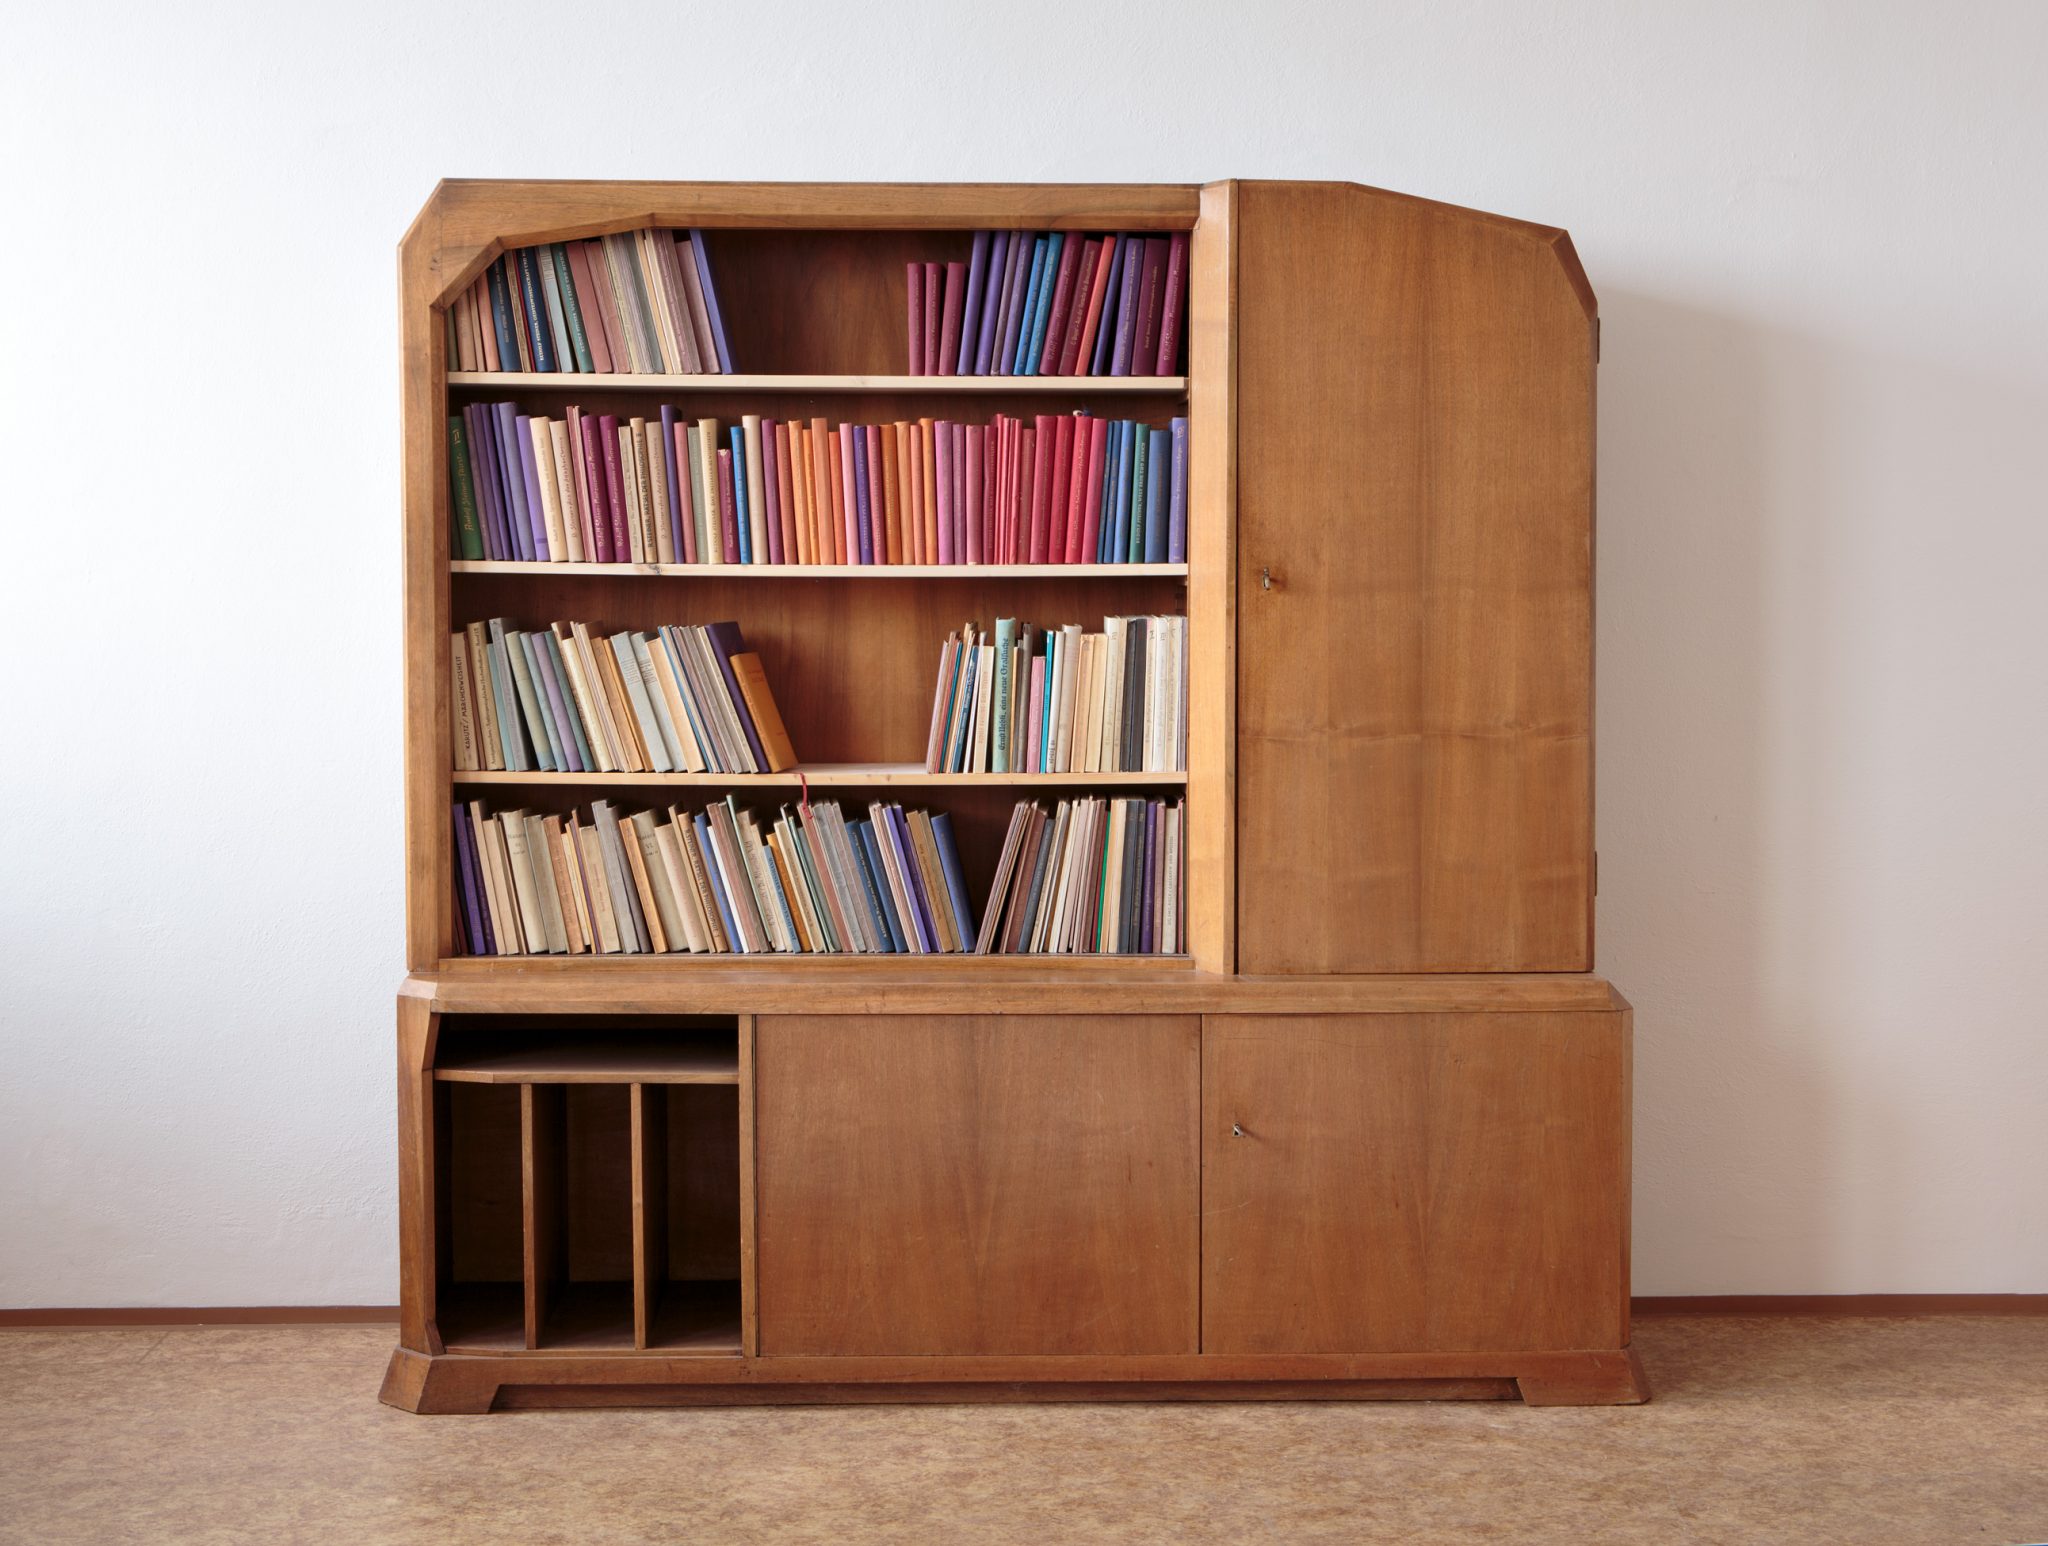 Felix Kayser - Bookcase II., Material: wooden veneer, Period: anthroposophical style